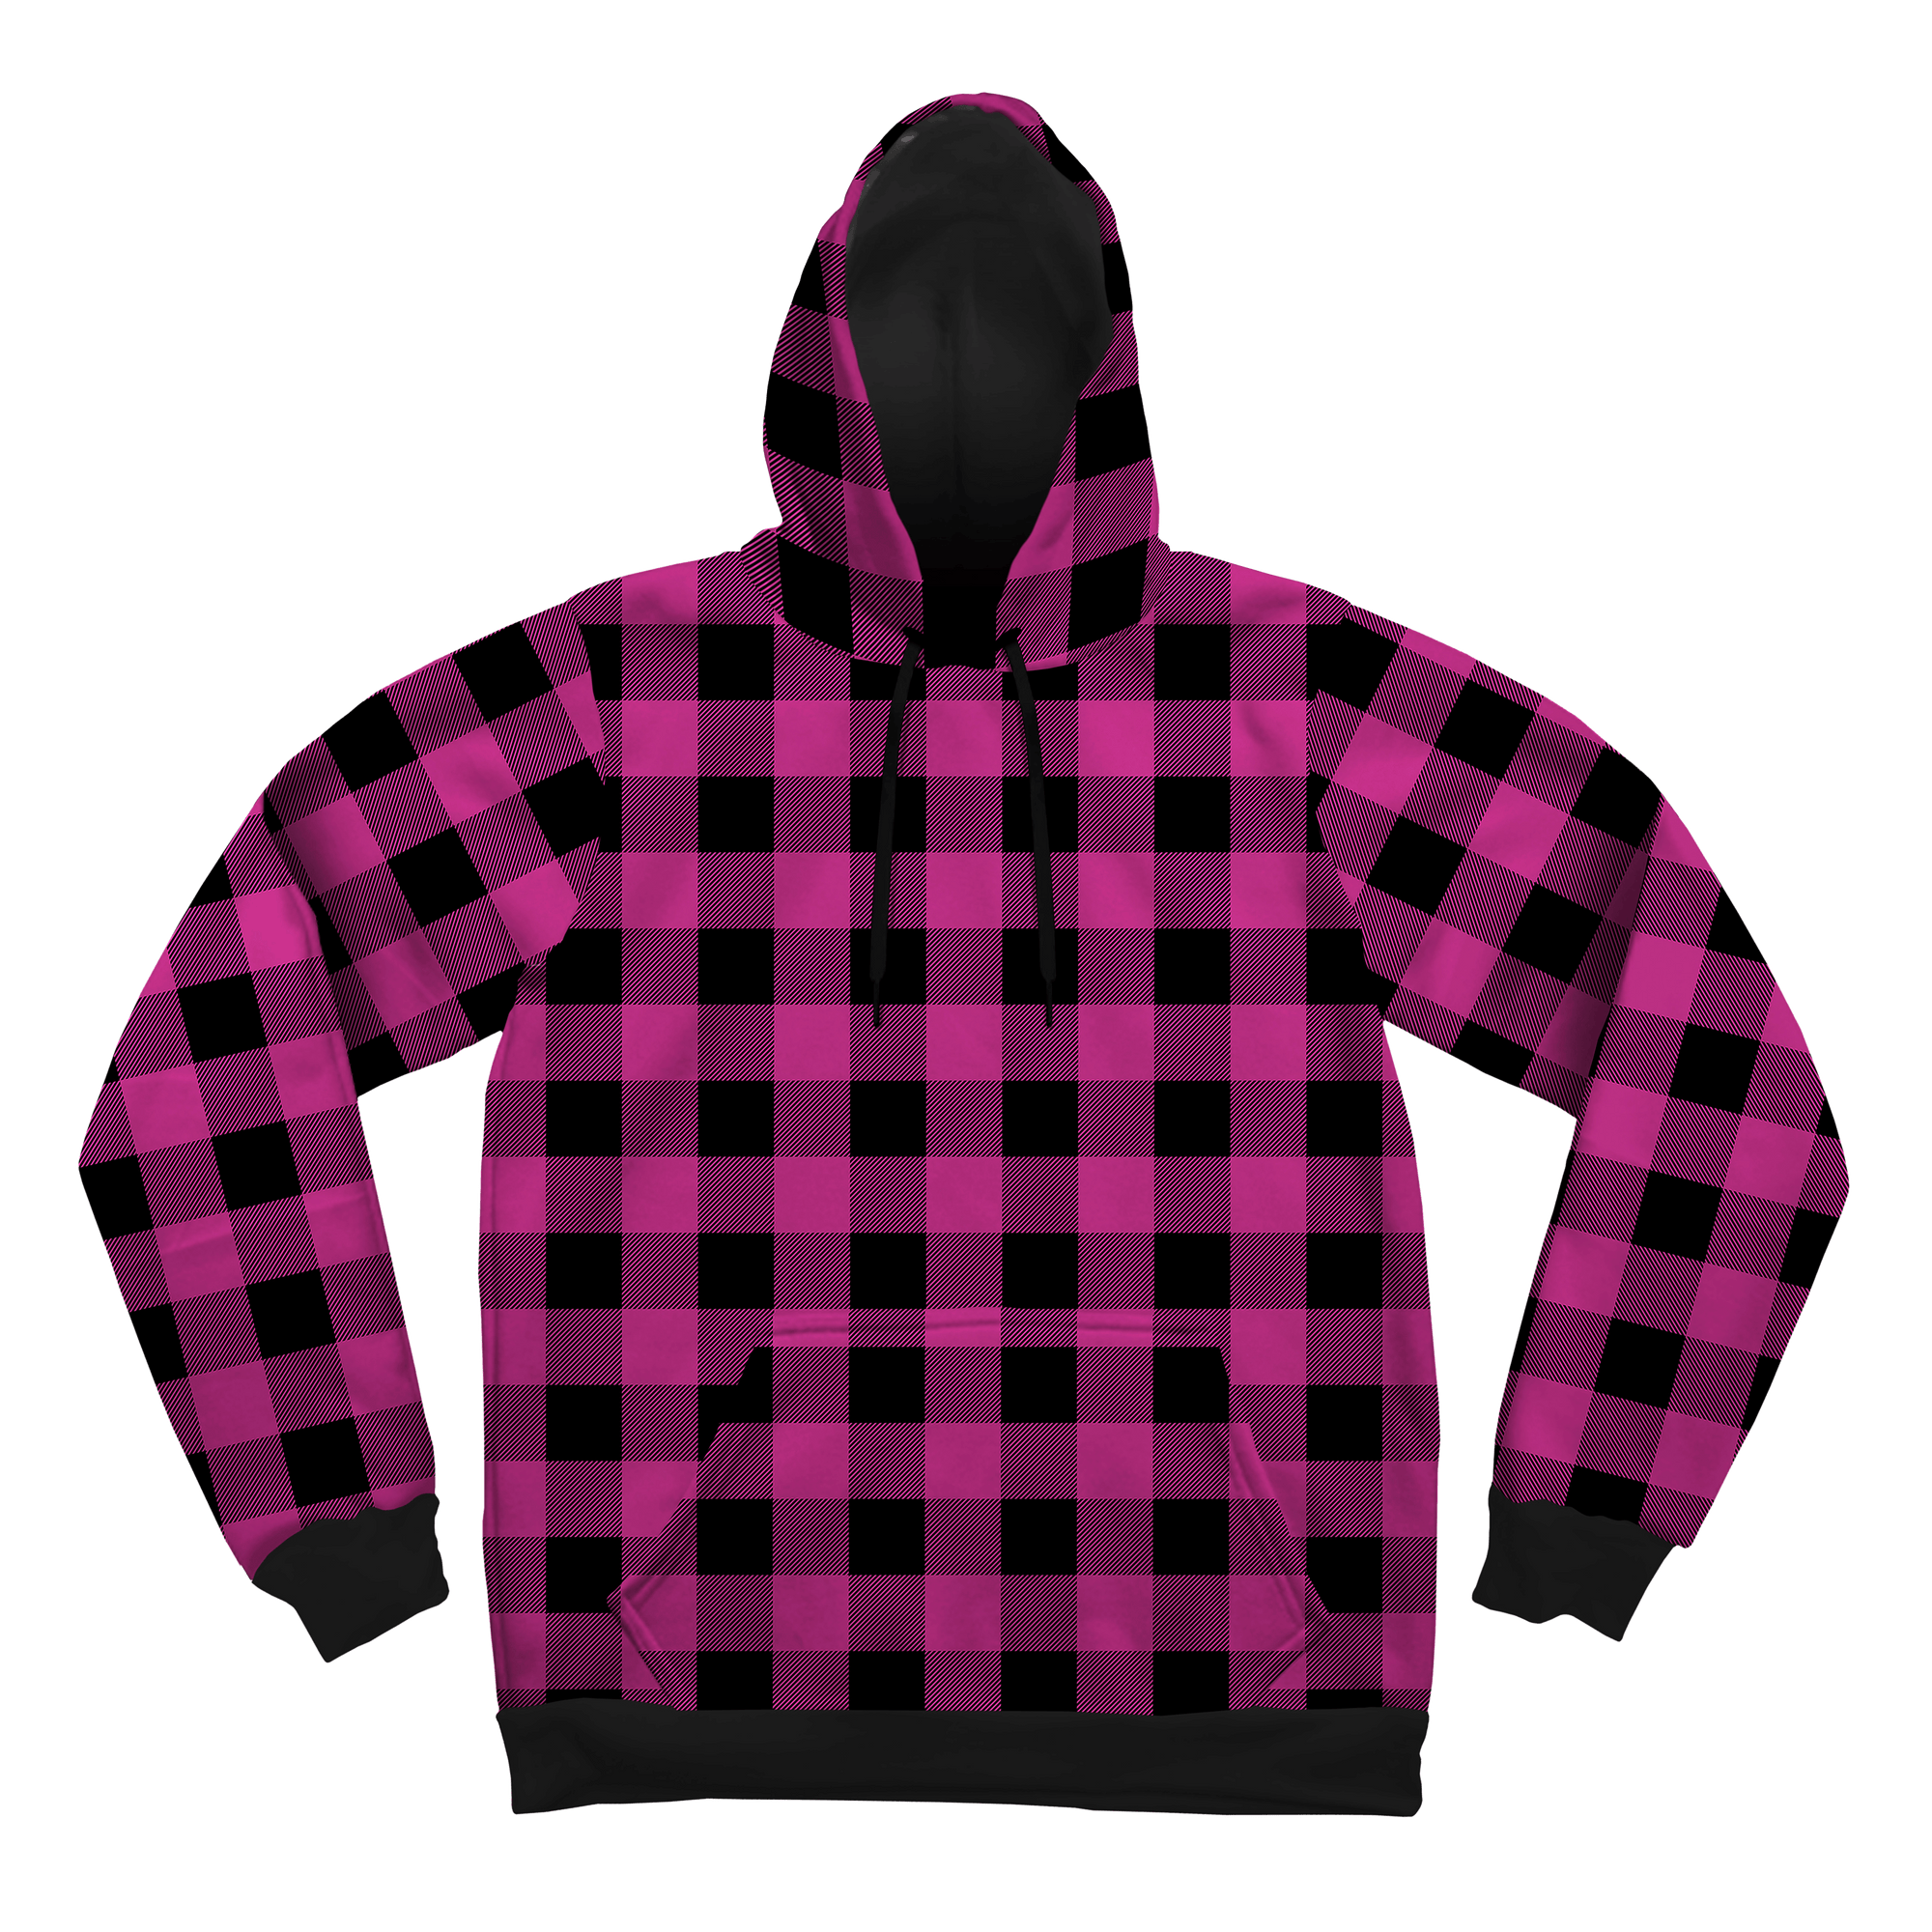 Neon Pink Black Plaid Pullover Hoodies T6 